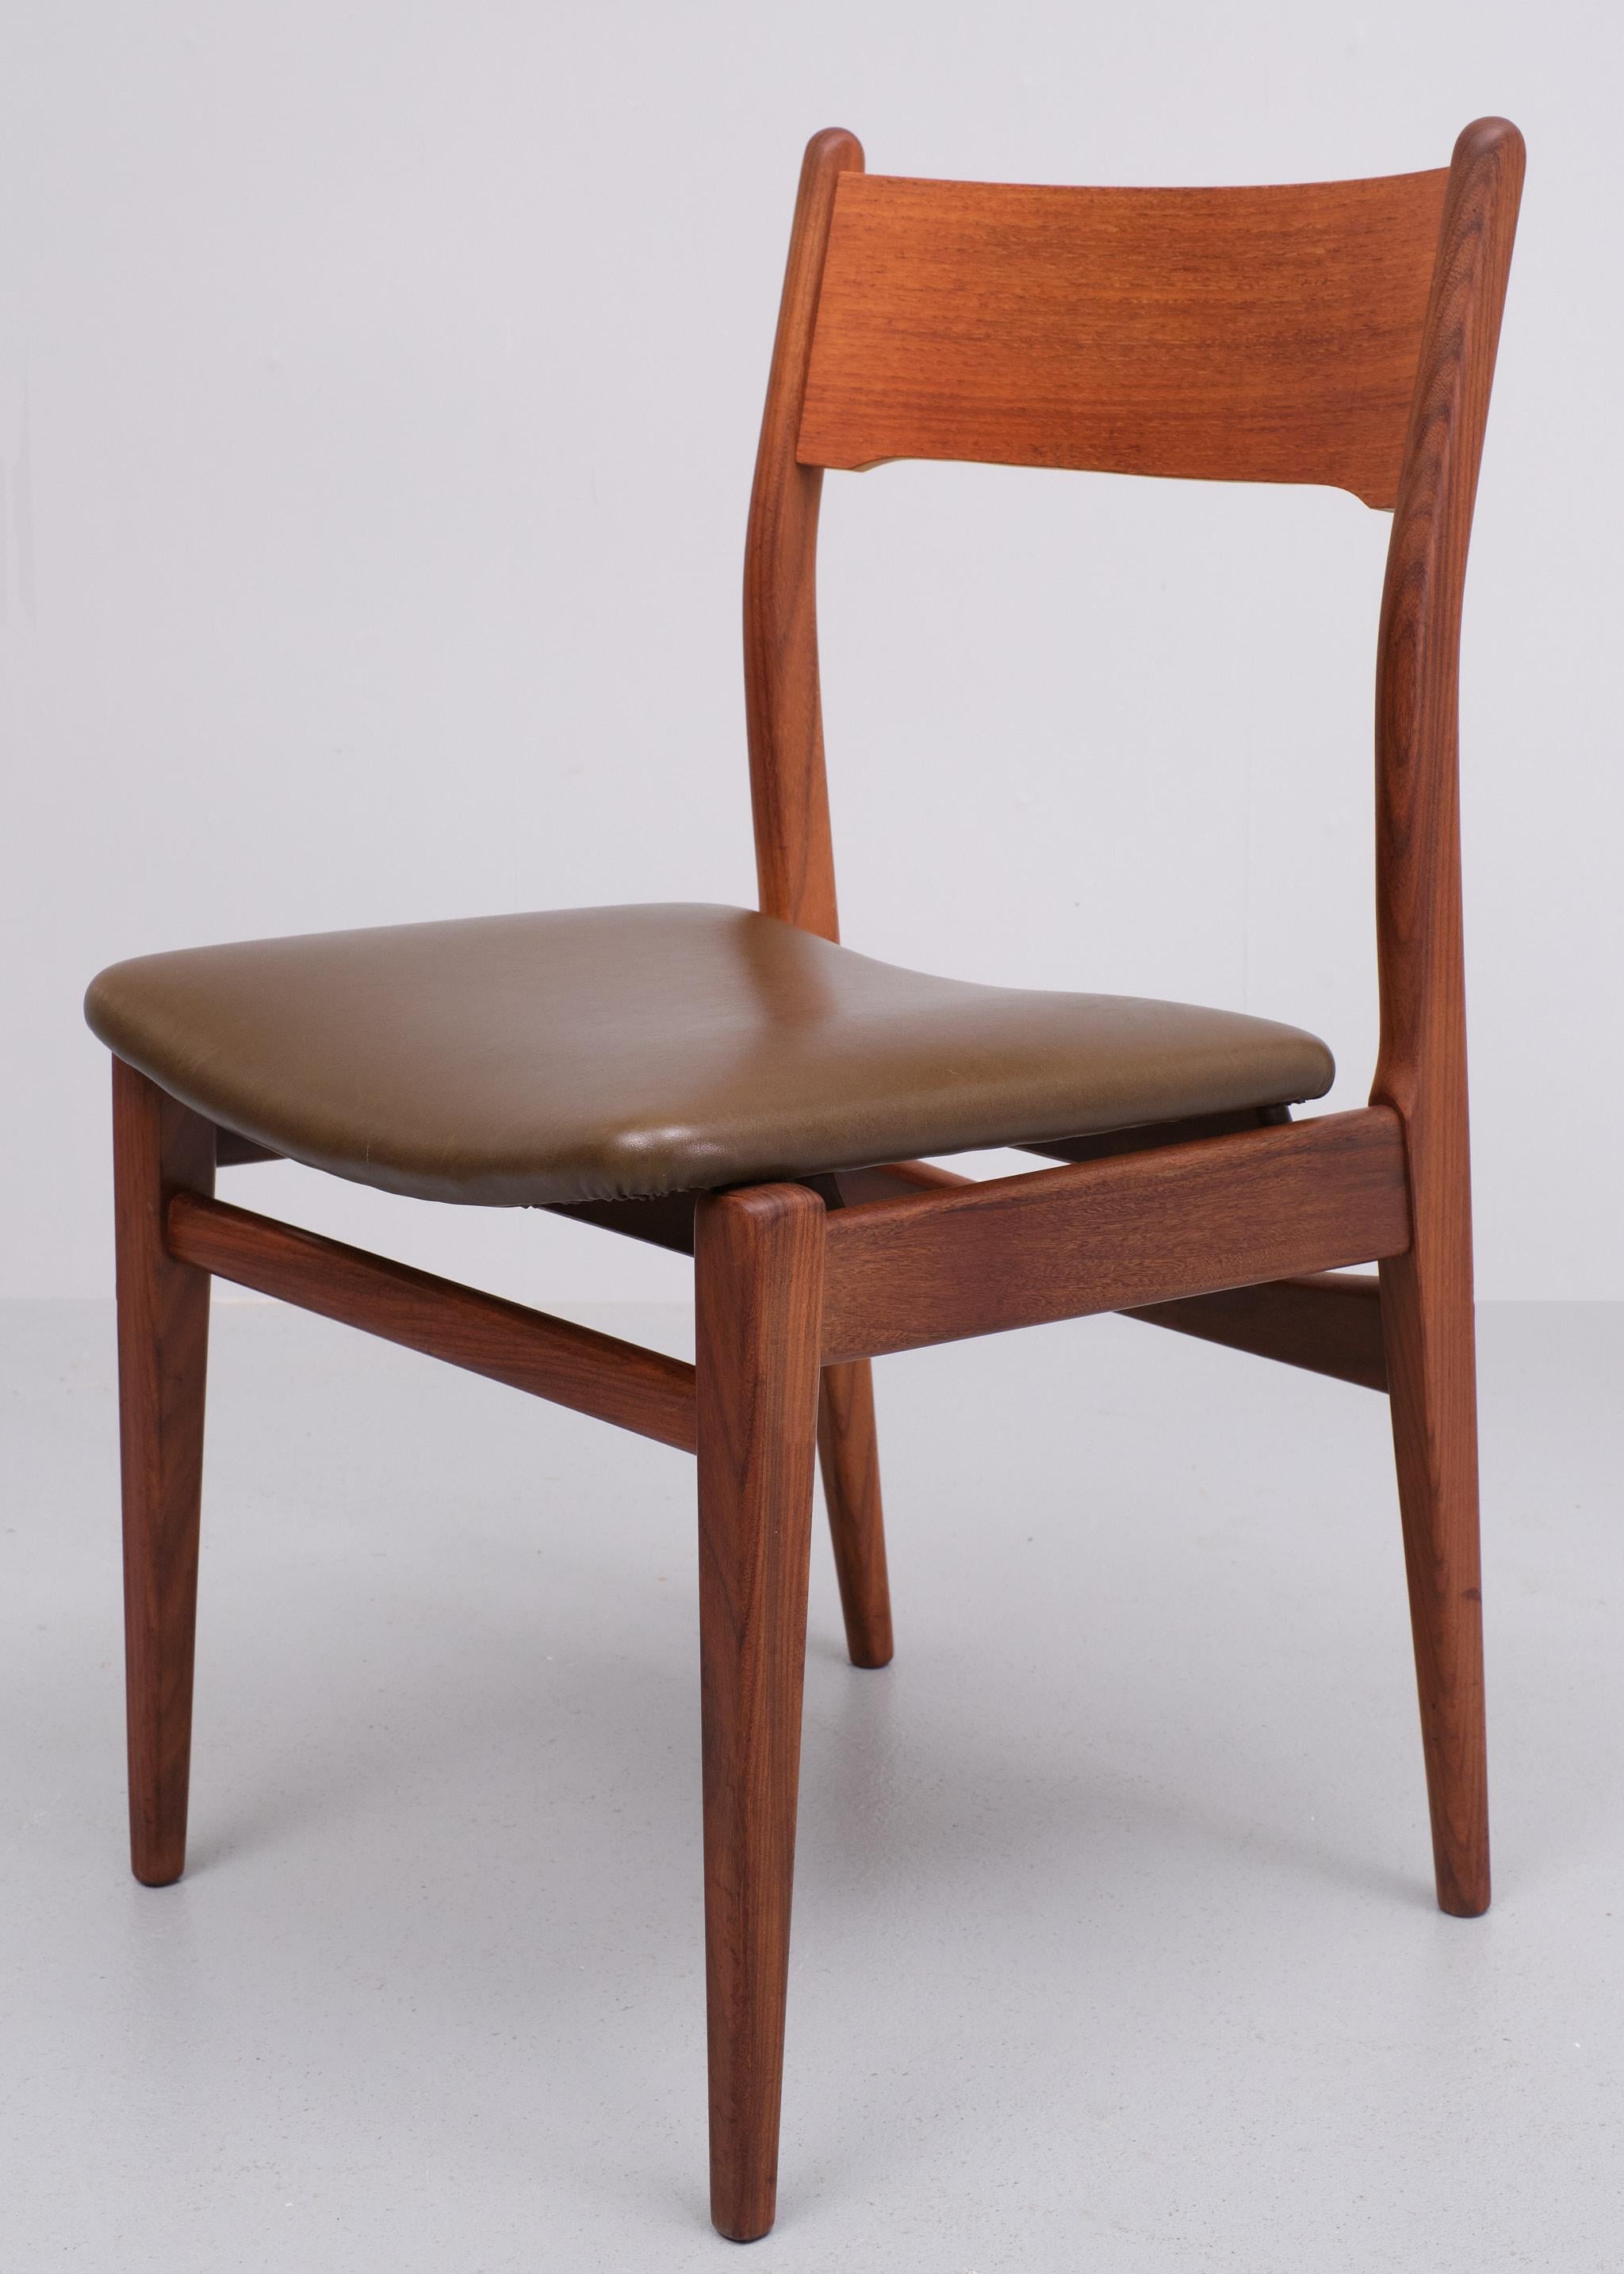 Mid-20th Century Louis van Teeffelen  Teak dining chairs 1960s  For Sale